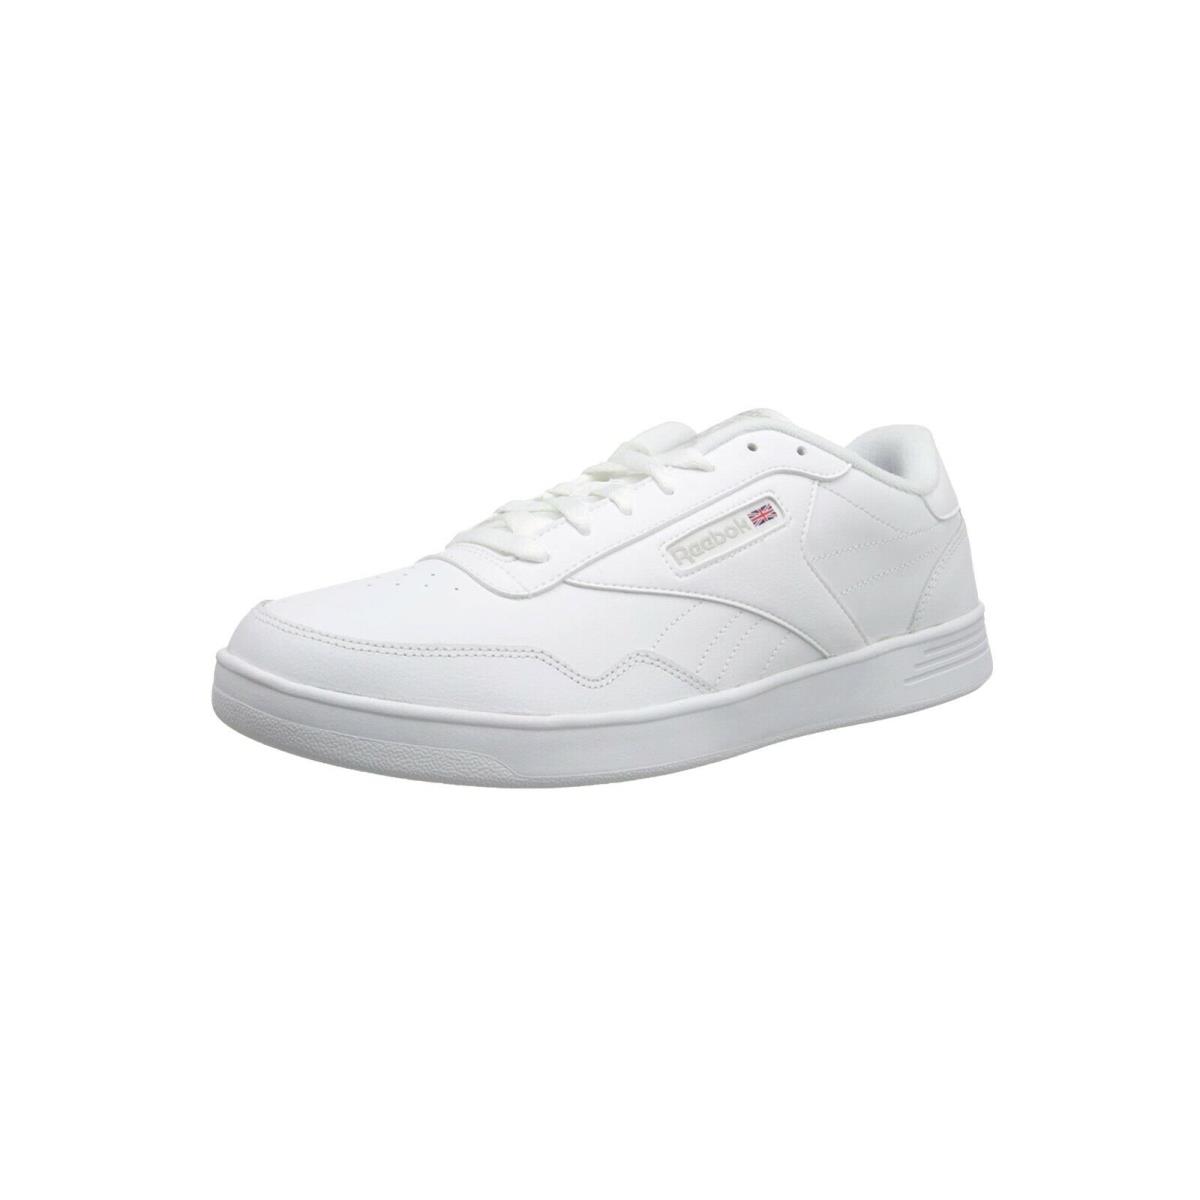 Reebok Club Memt 4E X-wide White Synthetic Leather Men Women Shoes Sneakers